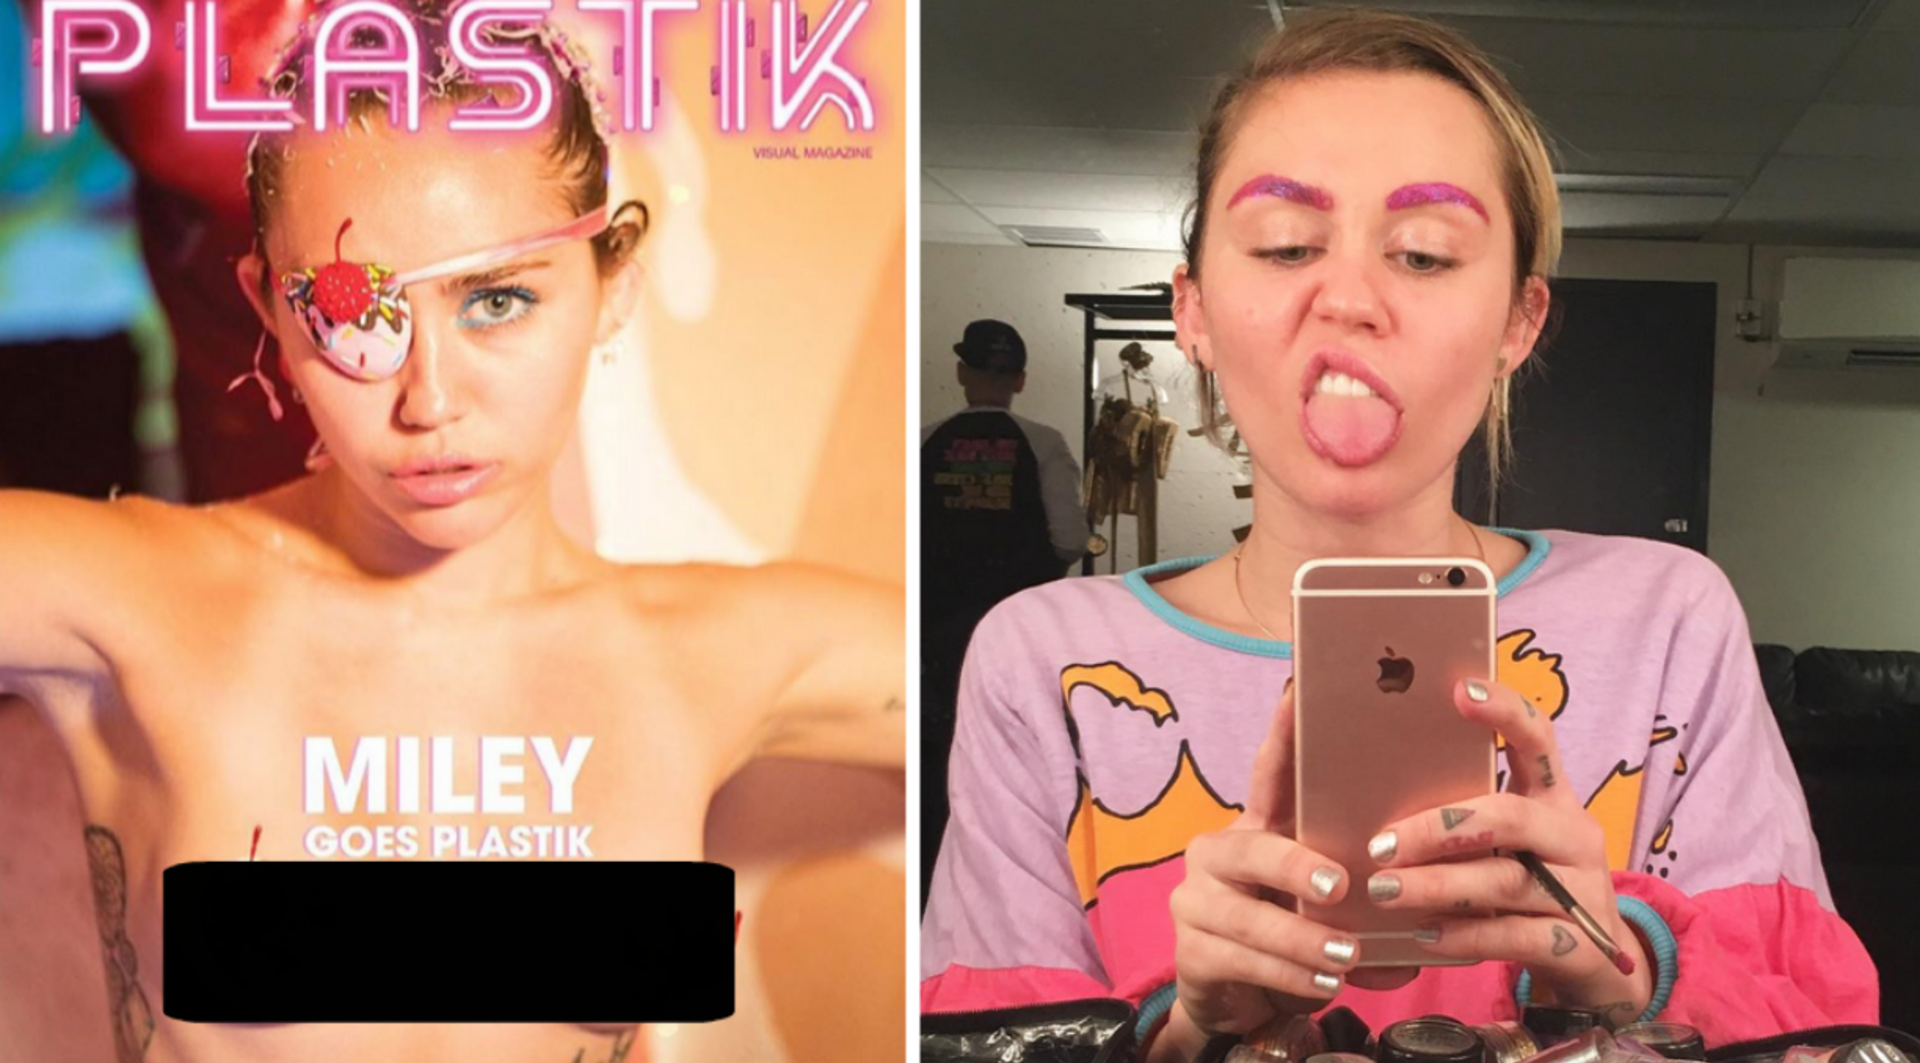 Miley pro Plastik magazine